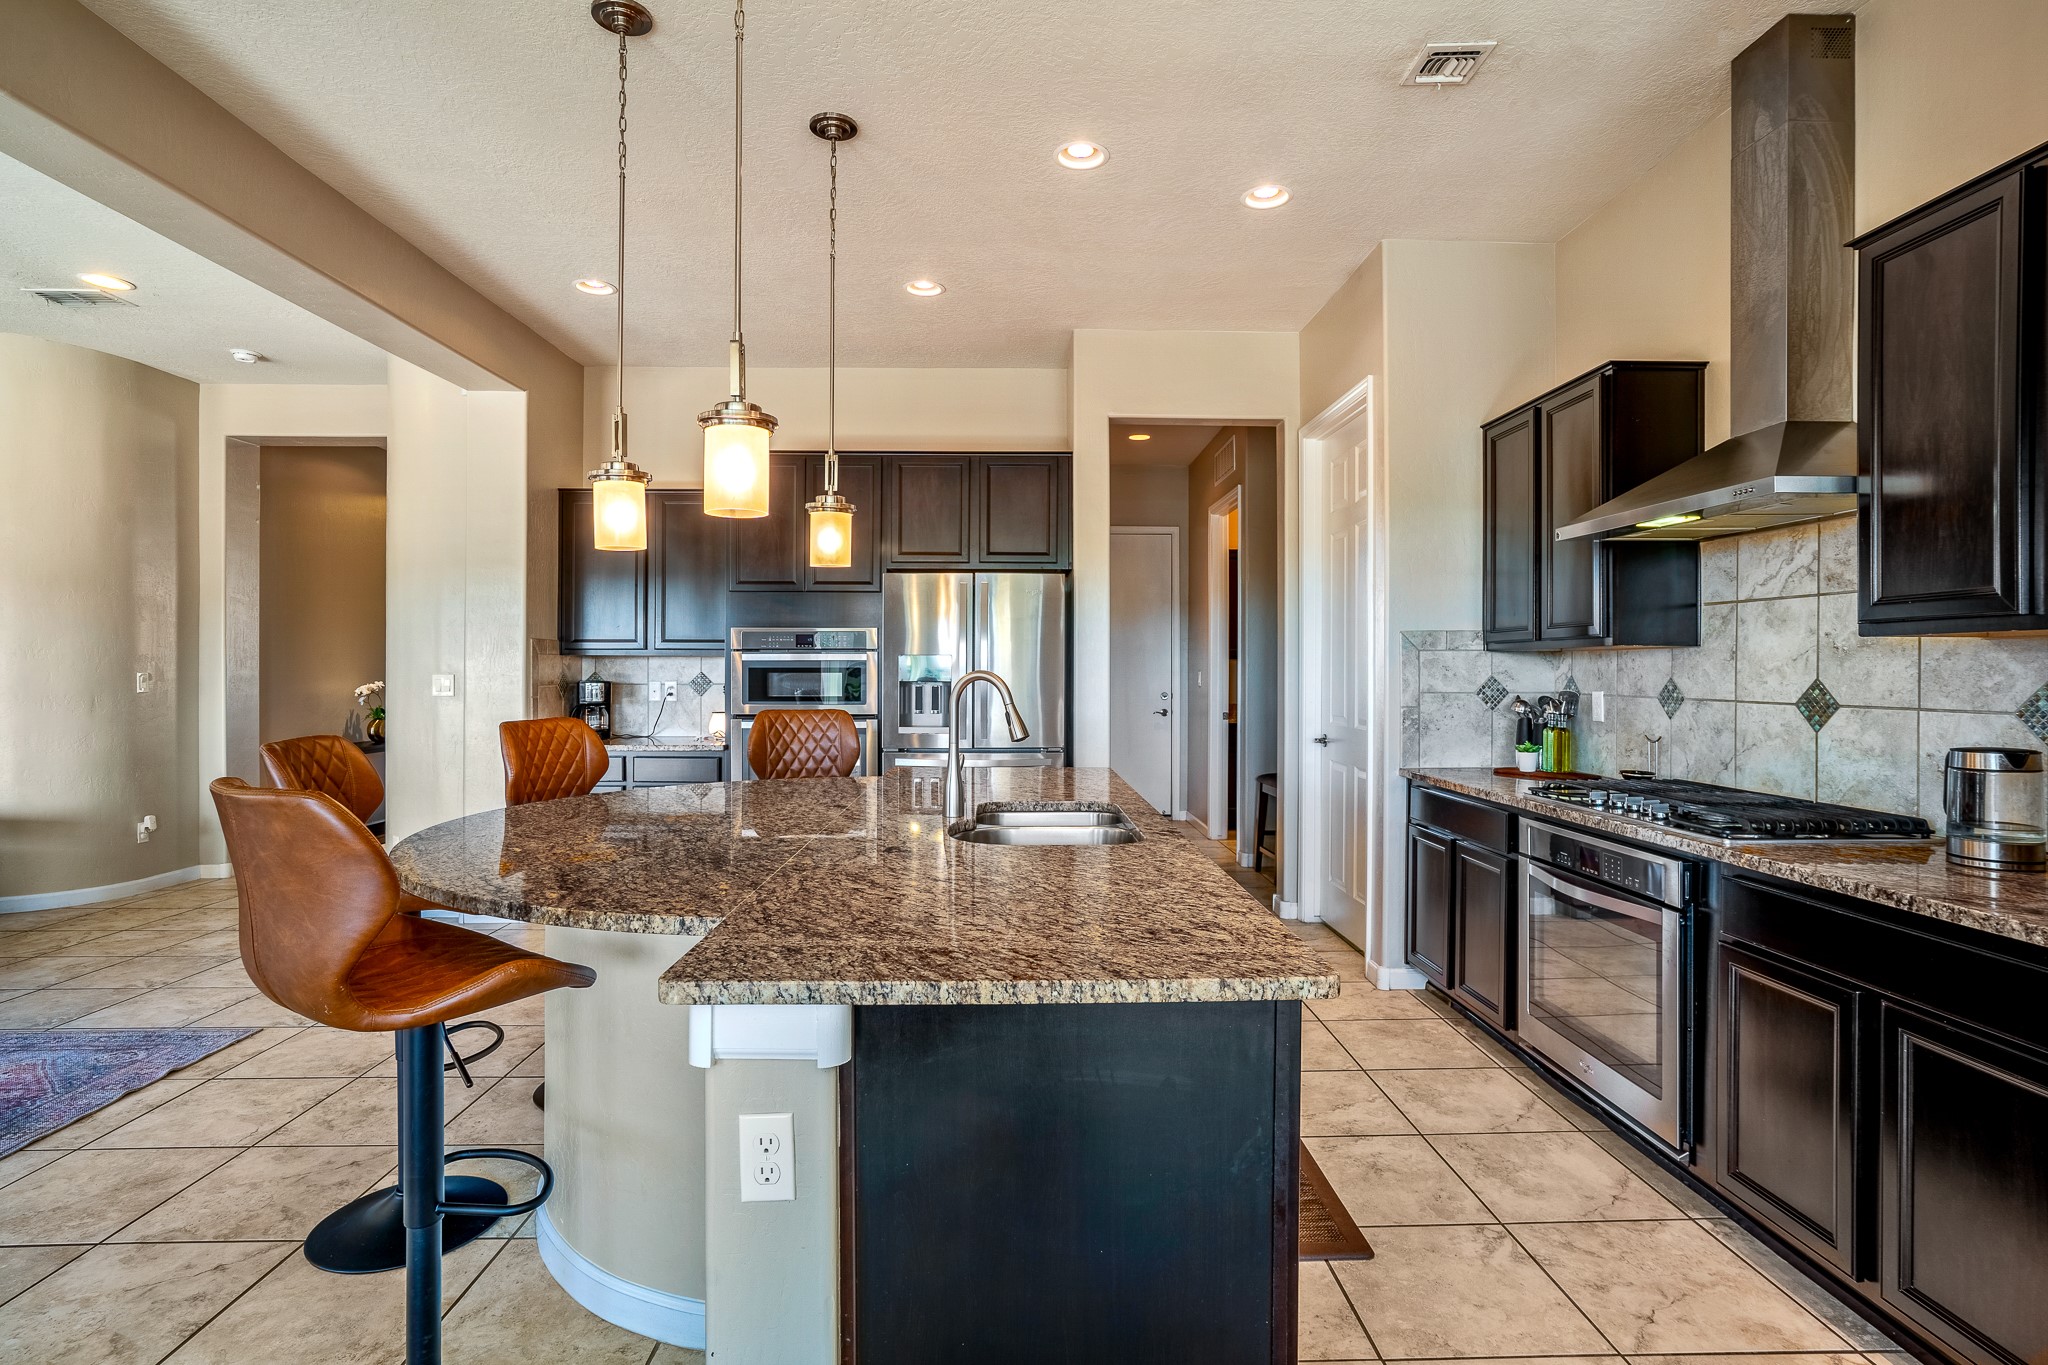 Easy Kitchen Floorplan with pendant lighting, excellent venting and detailed backsplash.